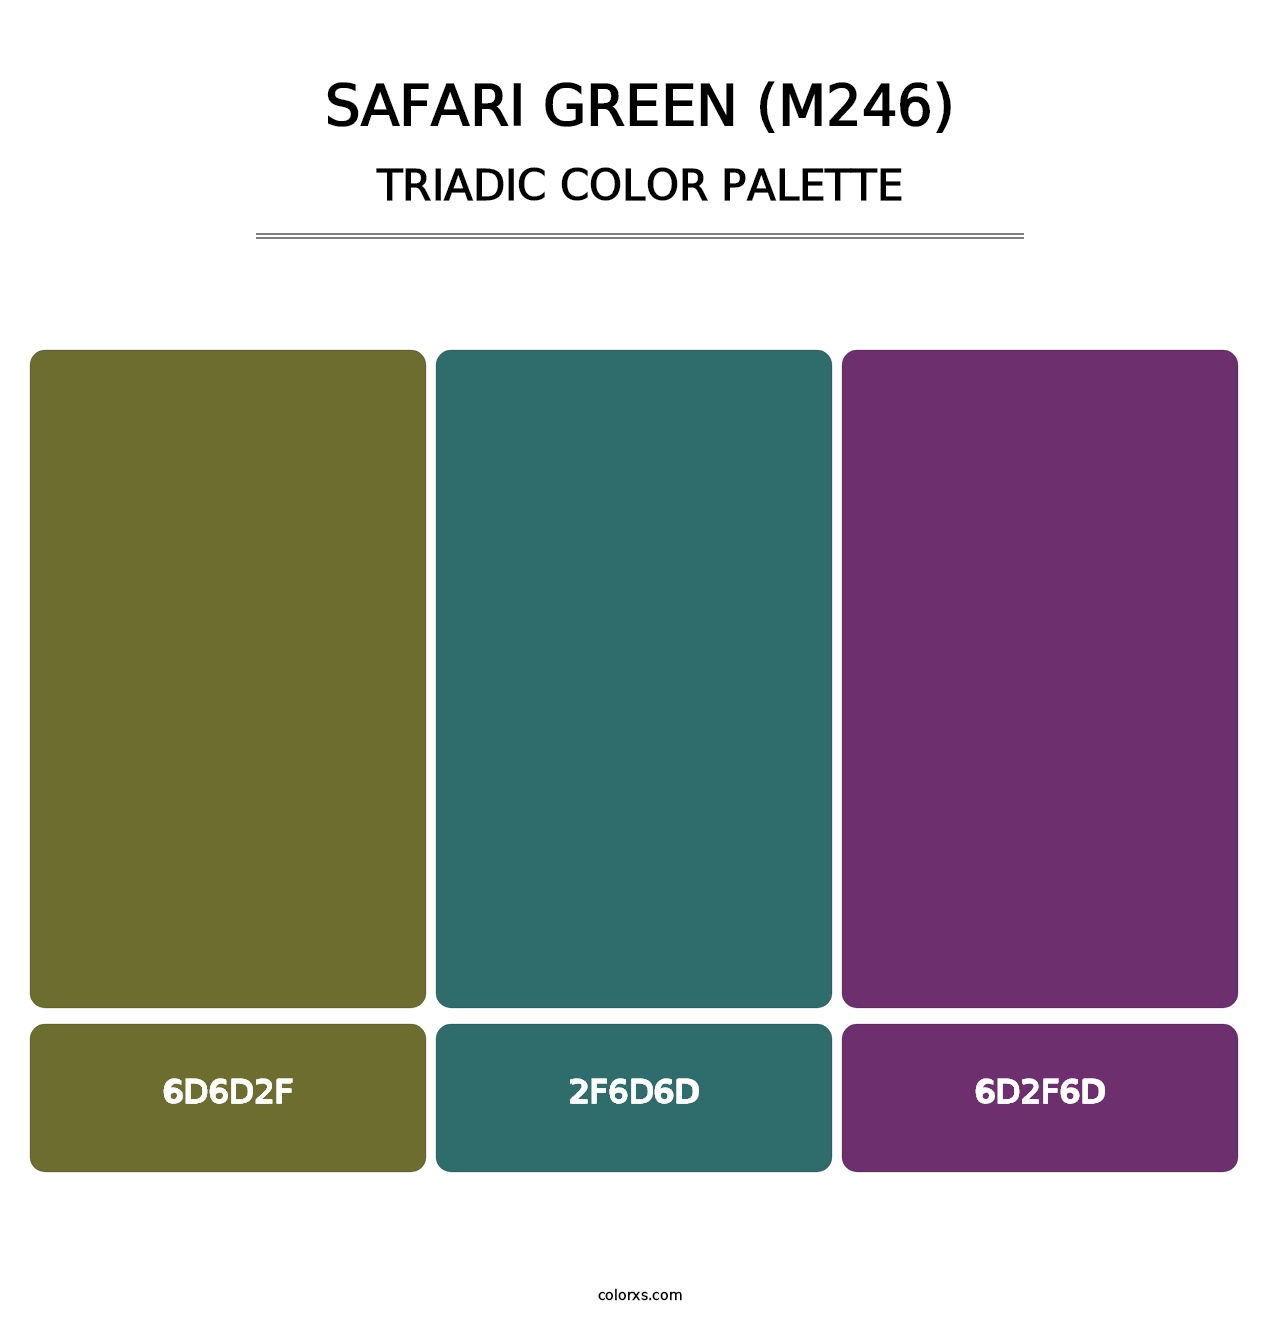 Safari Green (M246) - Triadic Color Palette